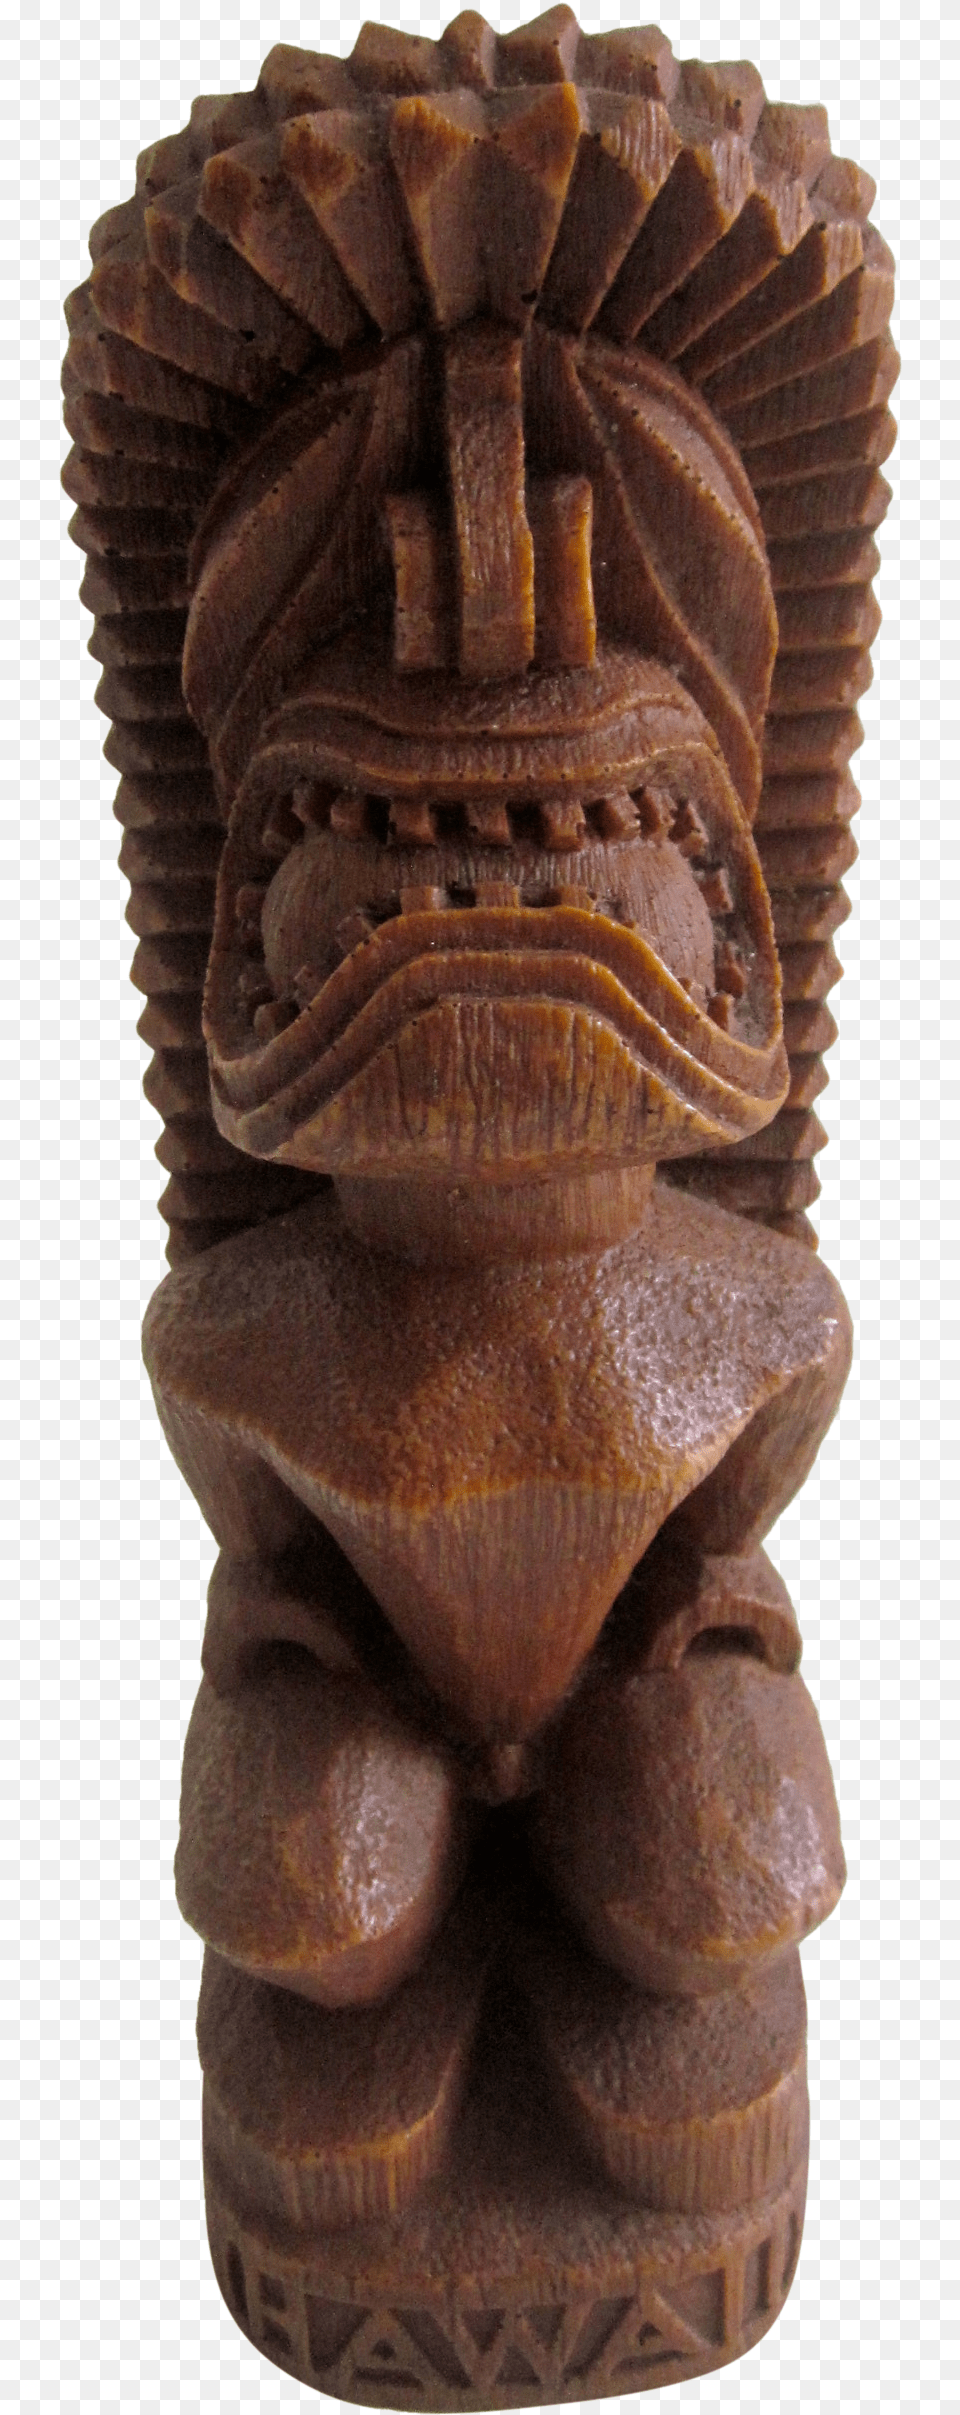 Tiki Statue Wooden Tiki Architecture, Emblem, Pillar, Symbol Free Transparent Png